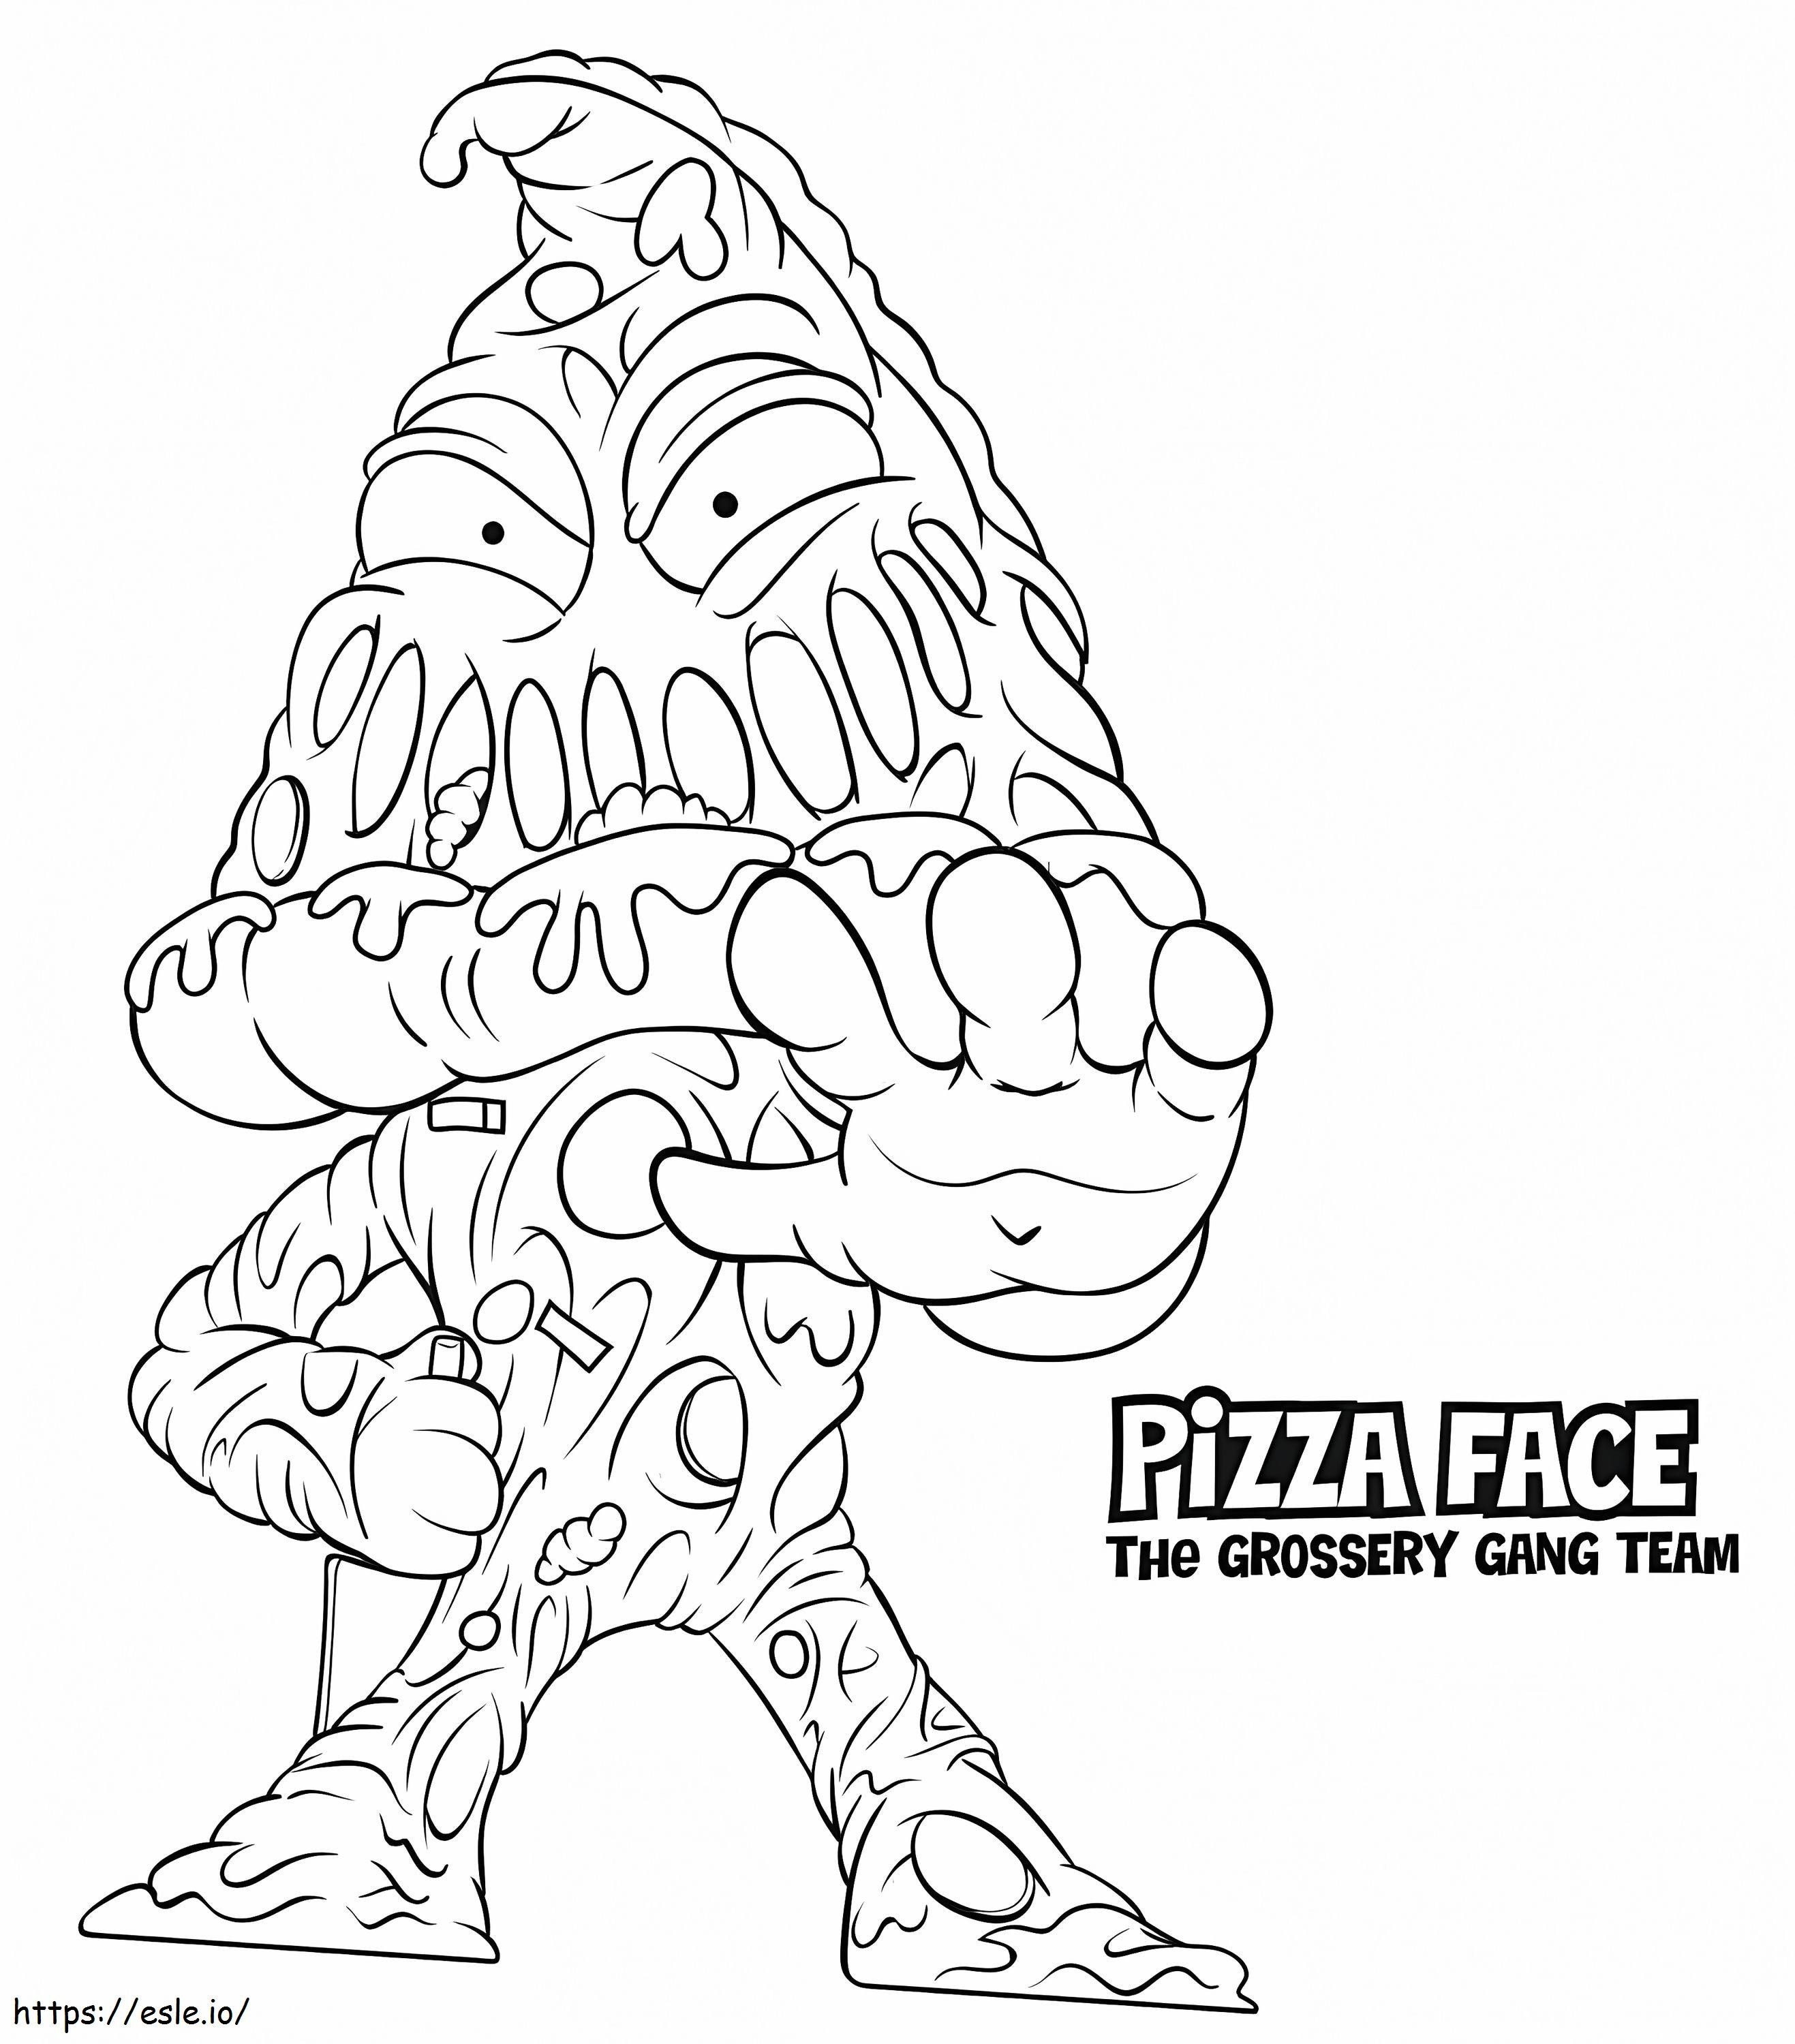 Coloriage Pizza Face Grossery Gang à imprimer dessin